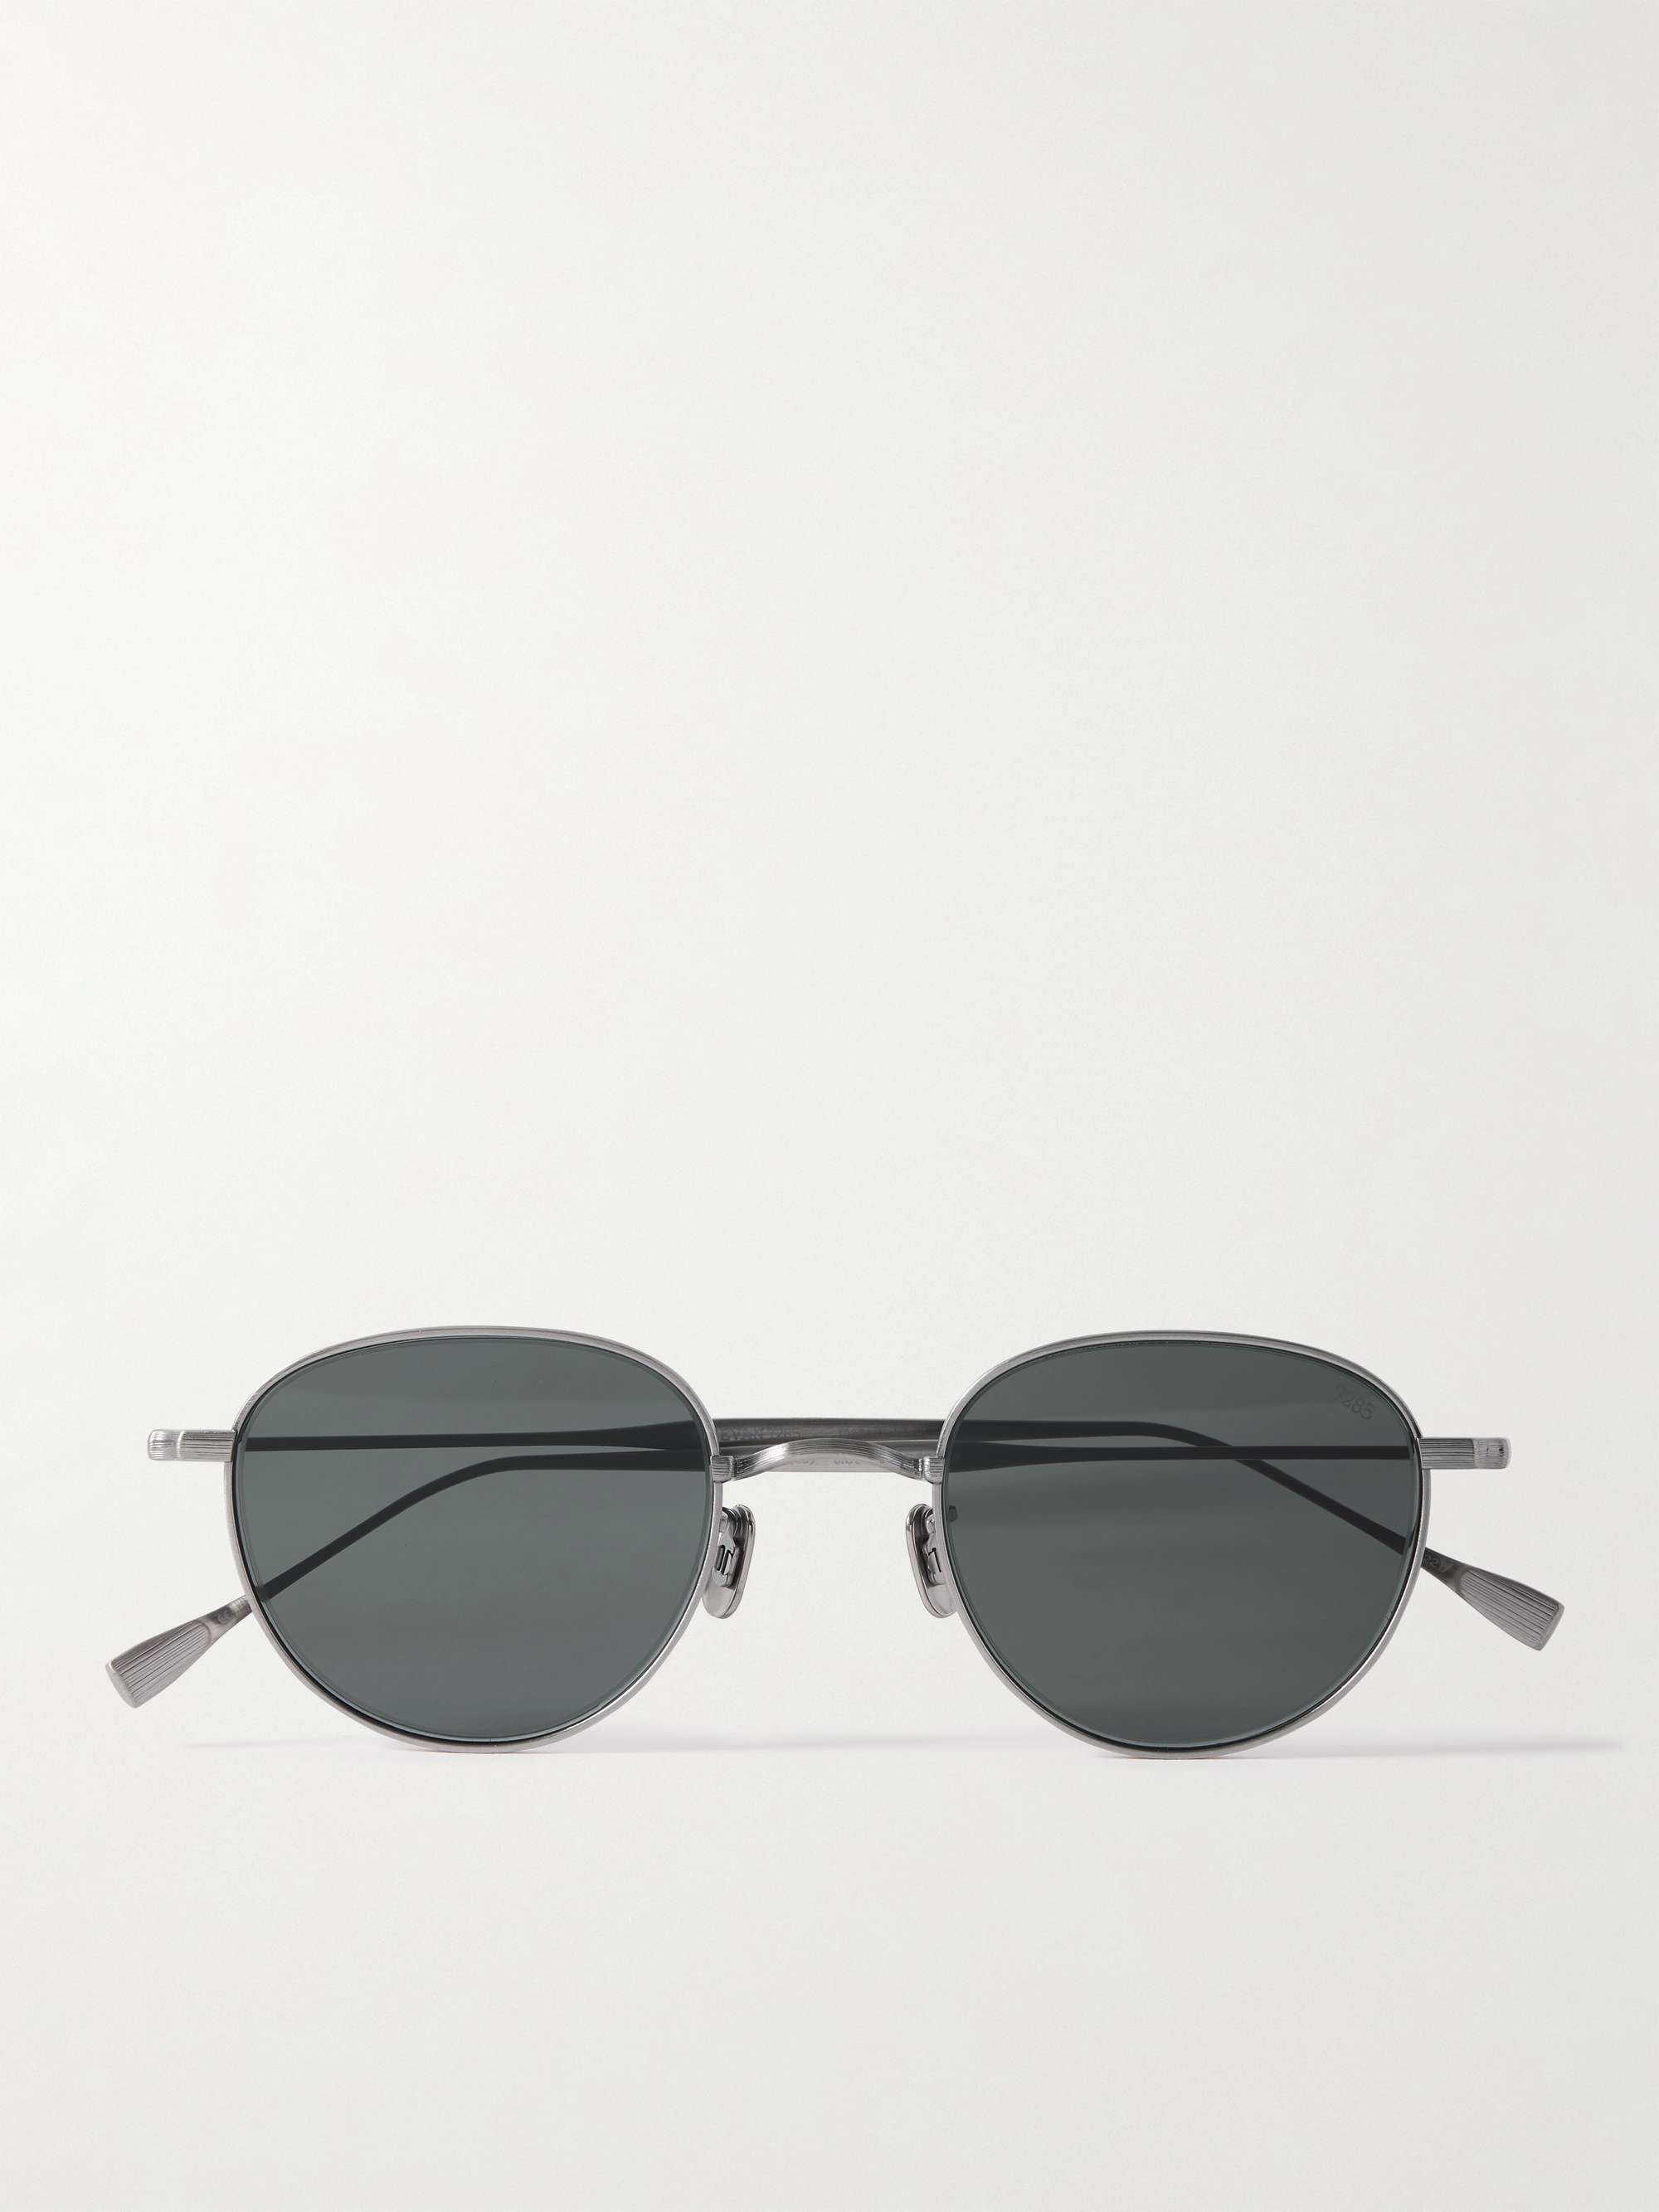 Eyevan sunglasses